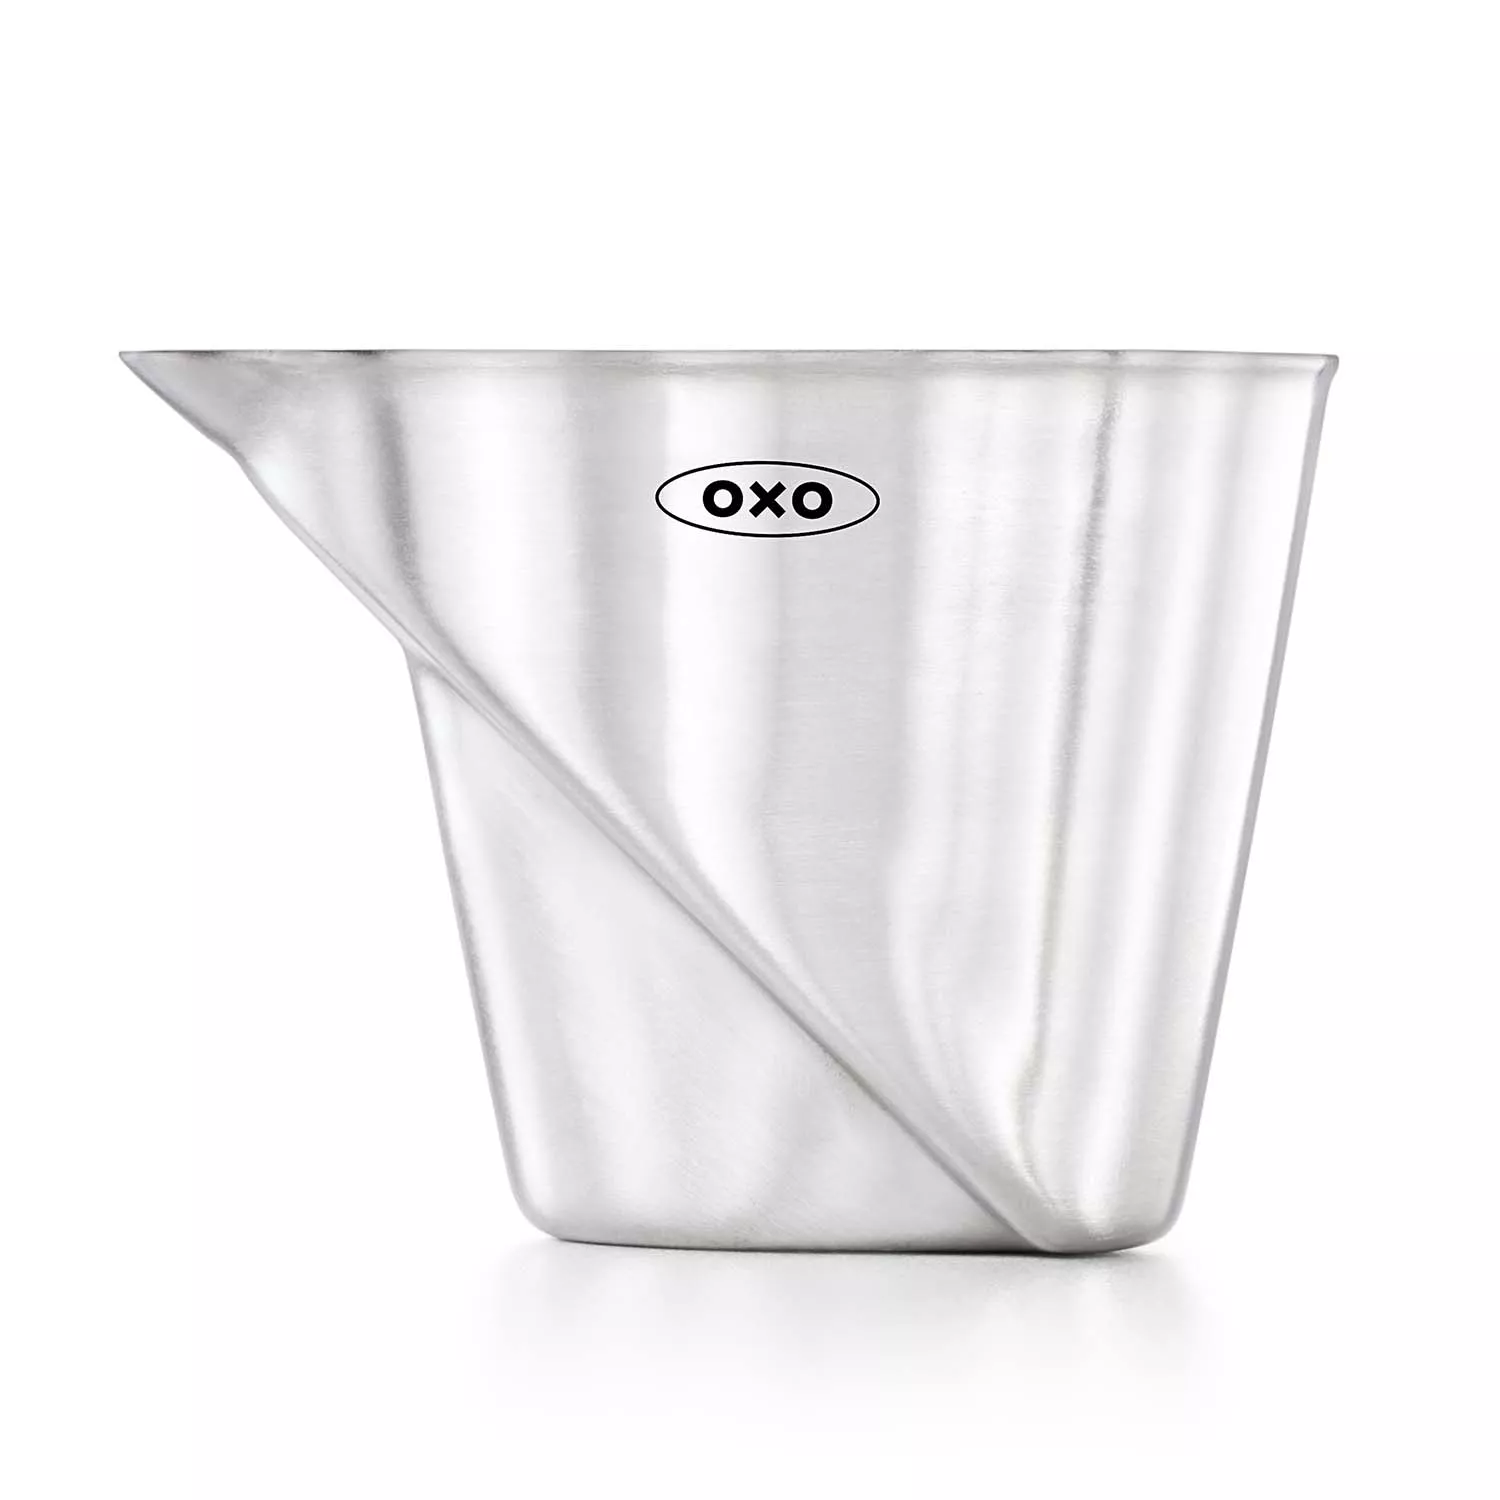 OXO Good Grips Mini Angled Measuring Cup, 2 Oz capacity